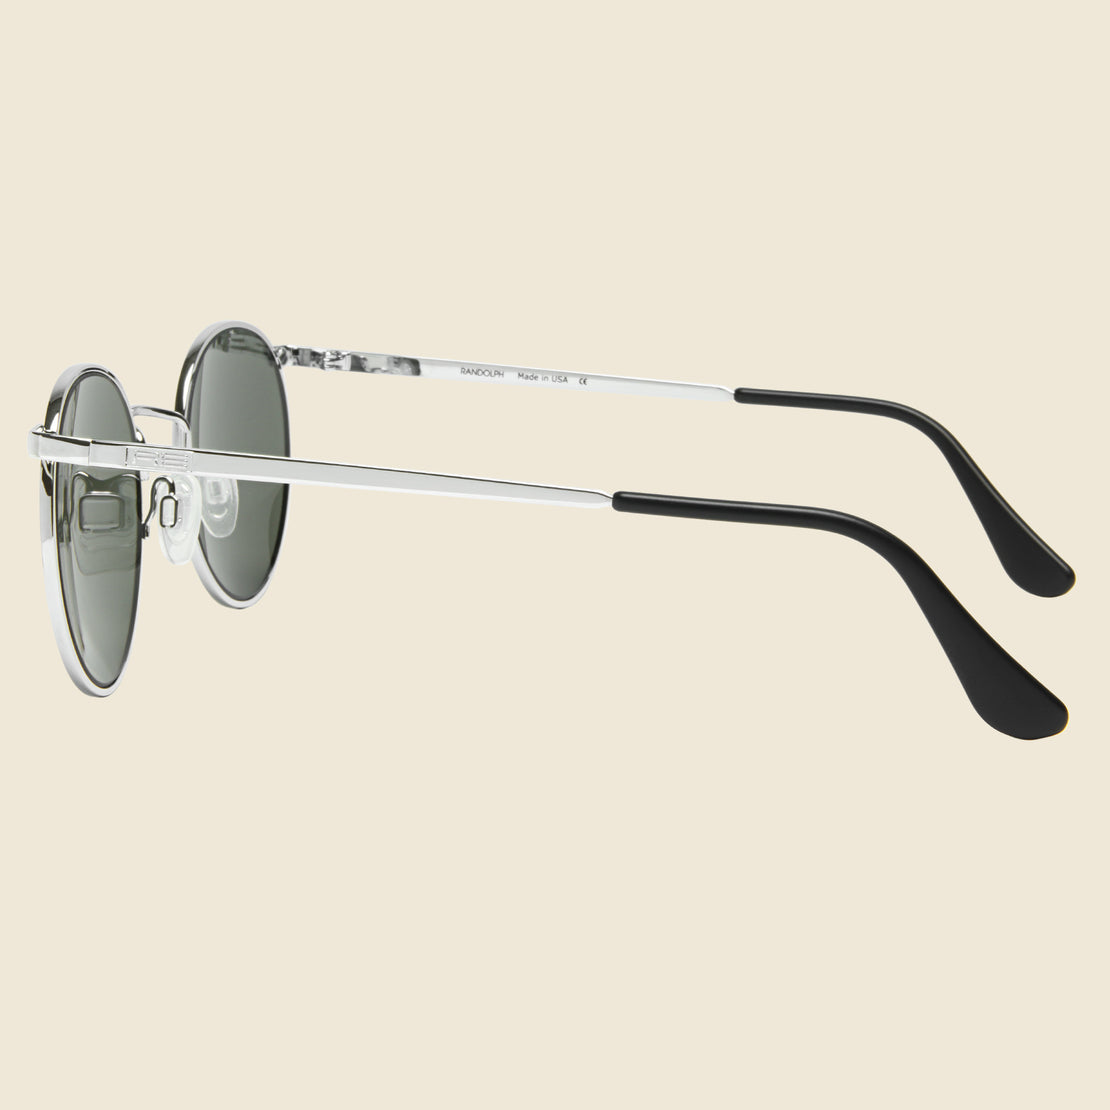 P3 Sunglasses - American Gray/Bright Chrome - Randolph Engineering - STAG Provisions - Accessories - Eyewear